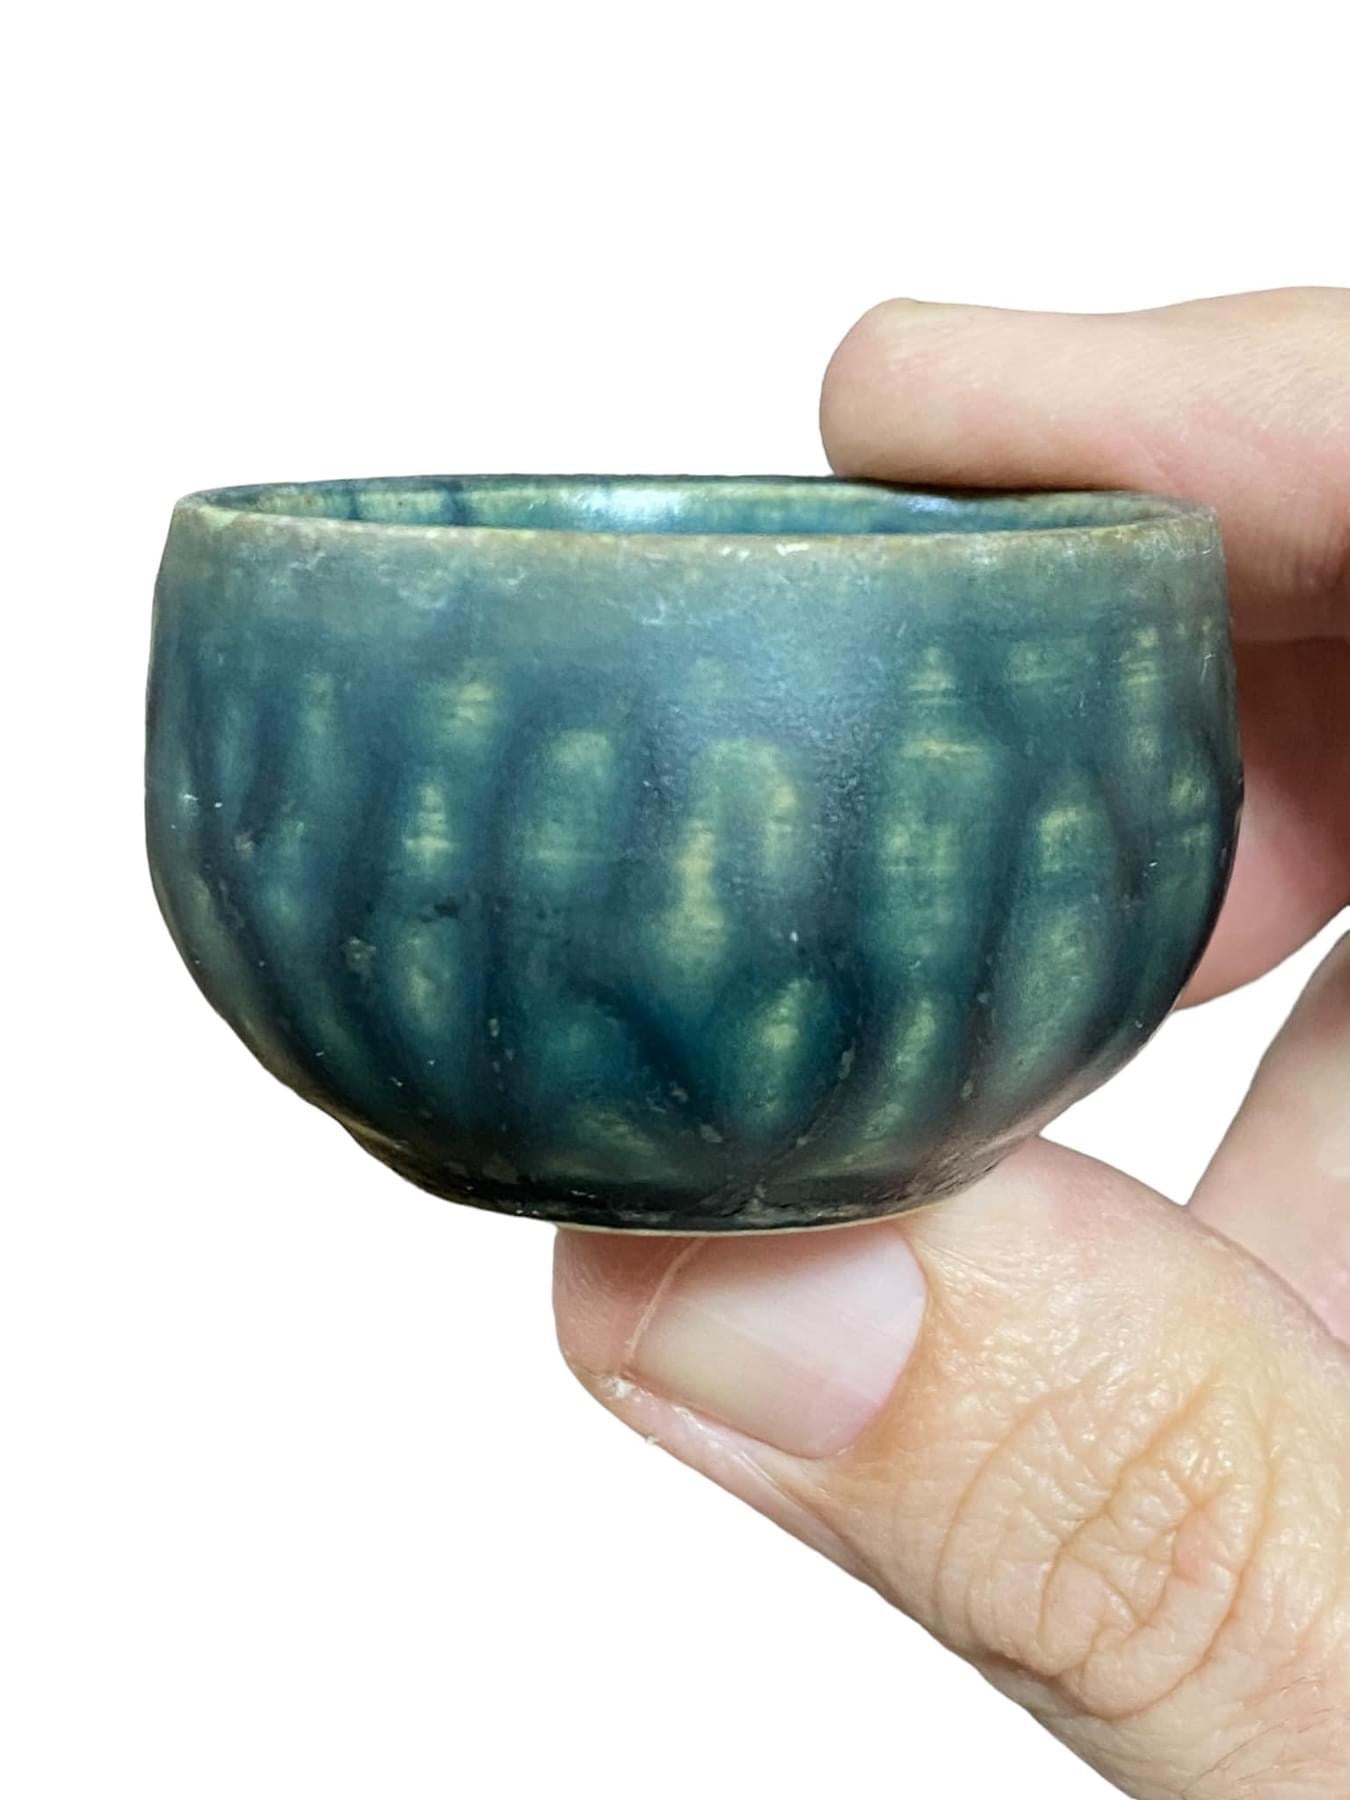 Japanese - Old Handmade Bonsai Pot from Japan